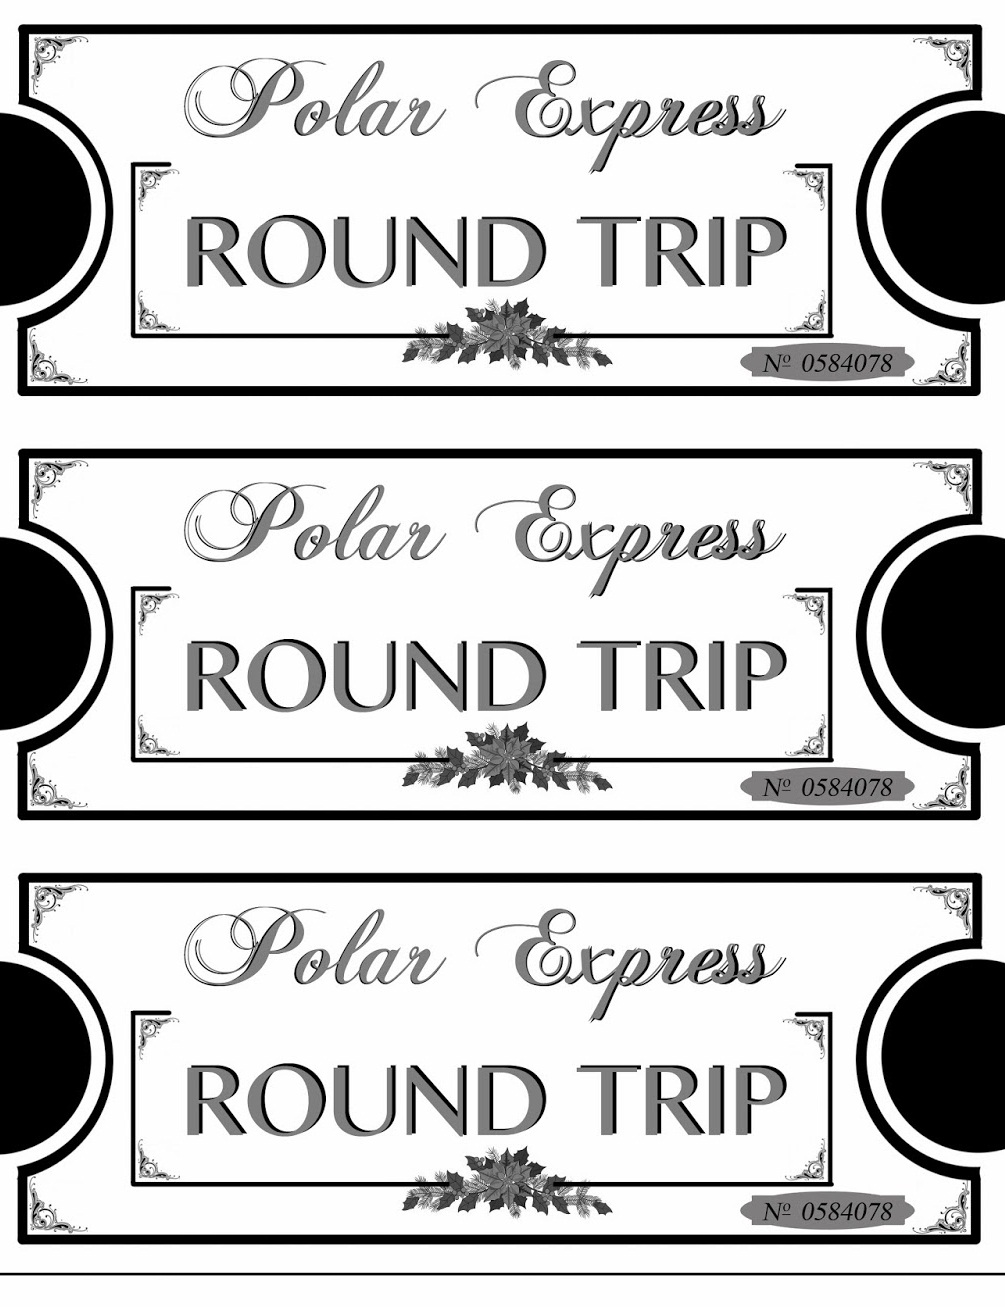 The Polar Express Ticket Printable